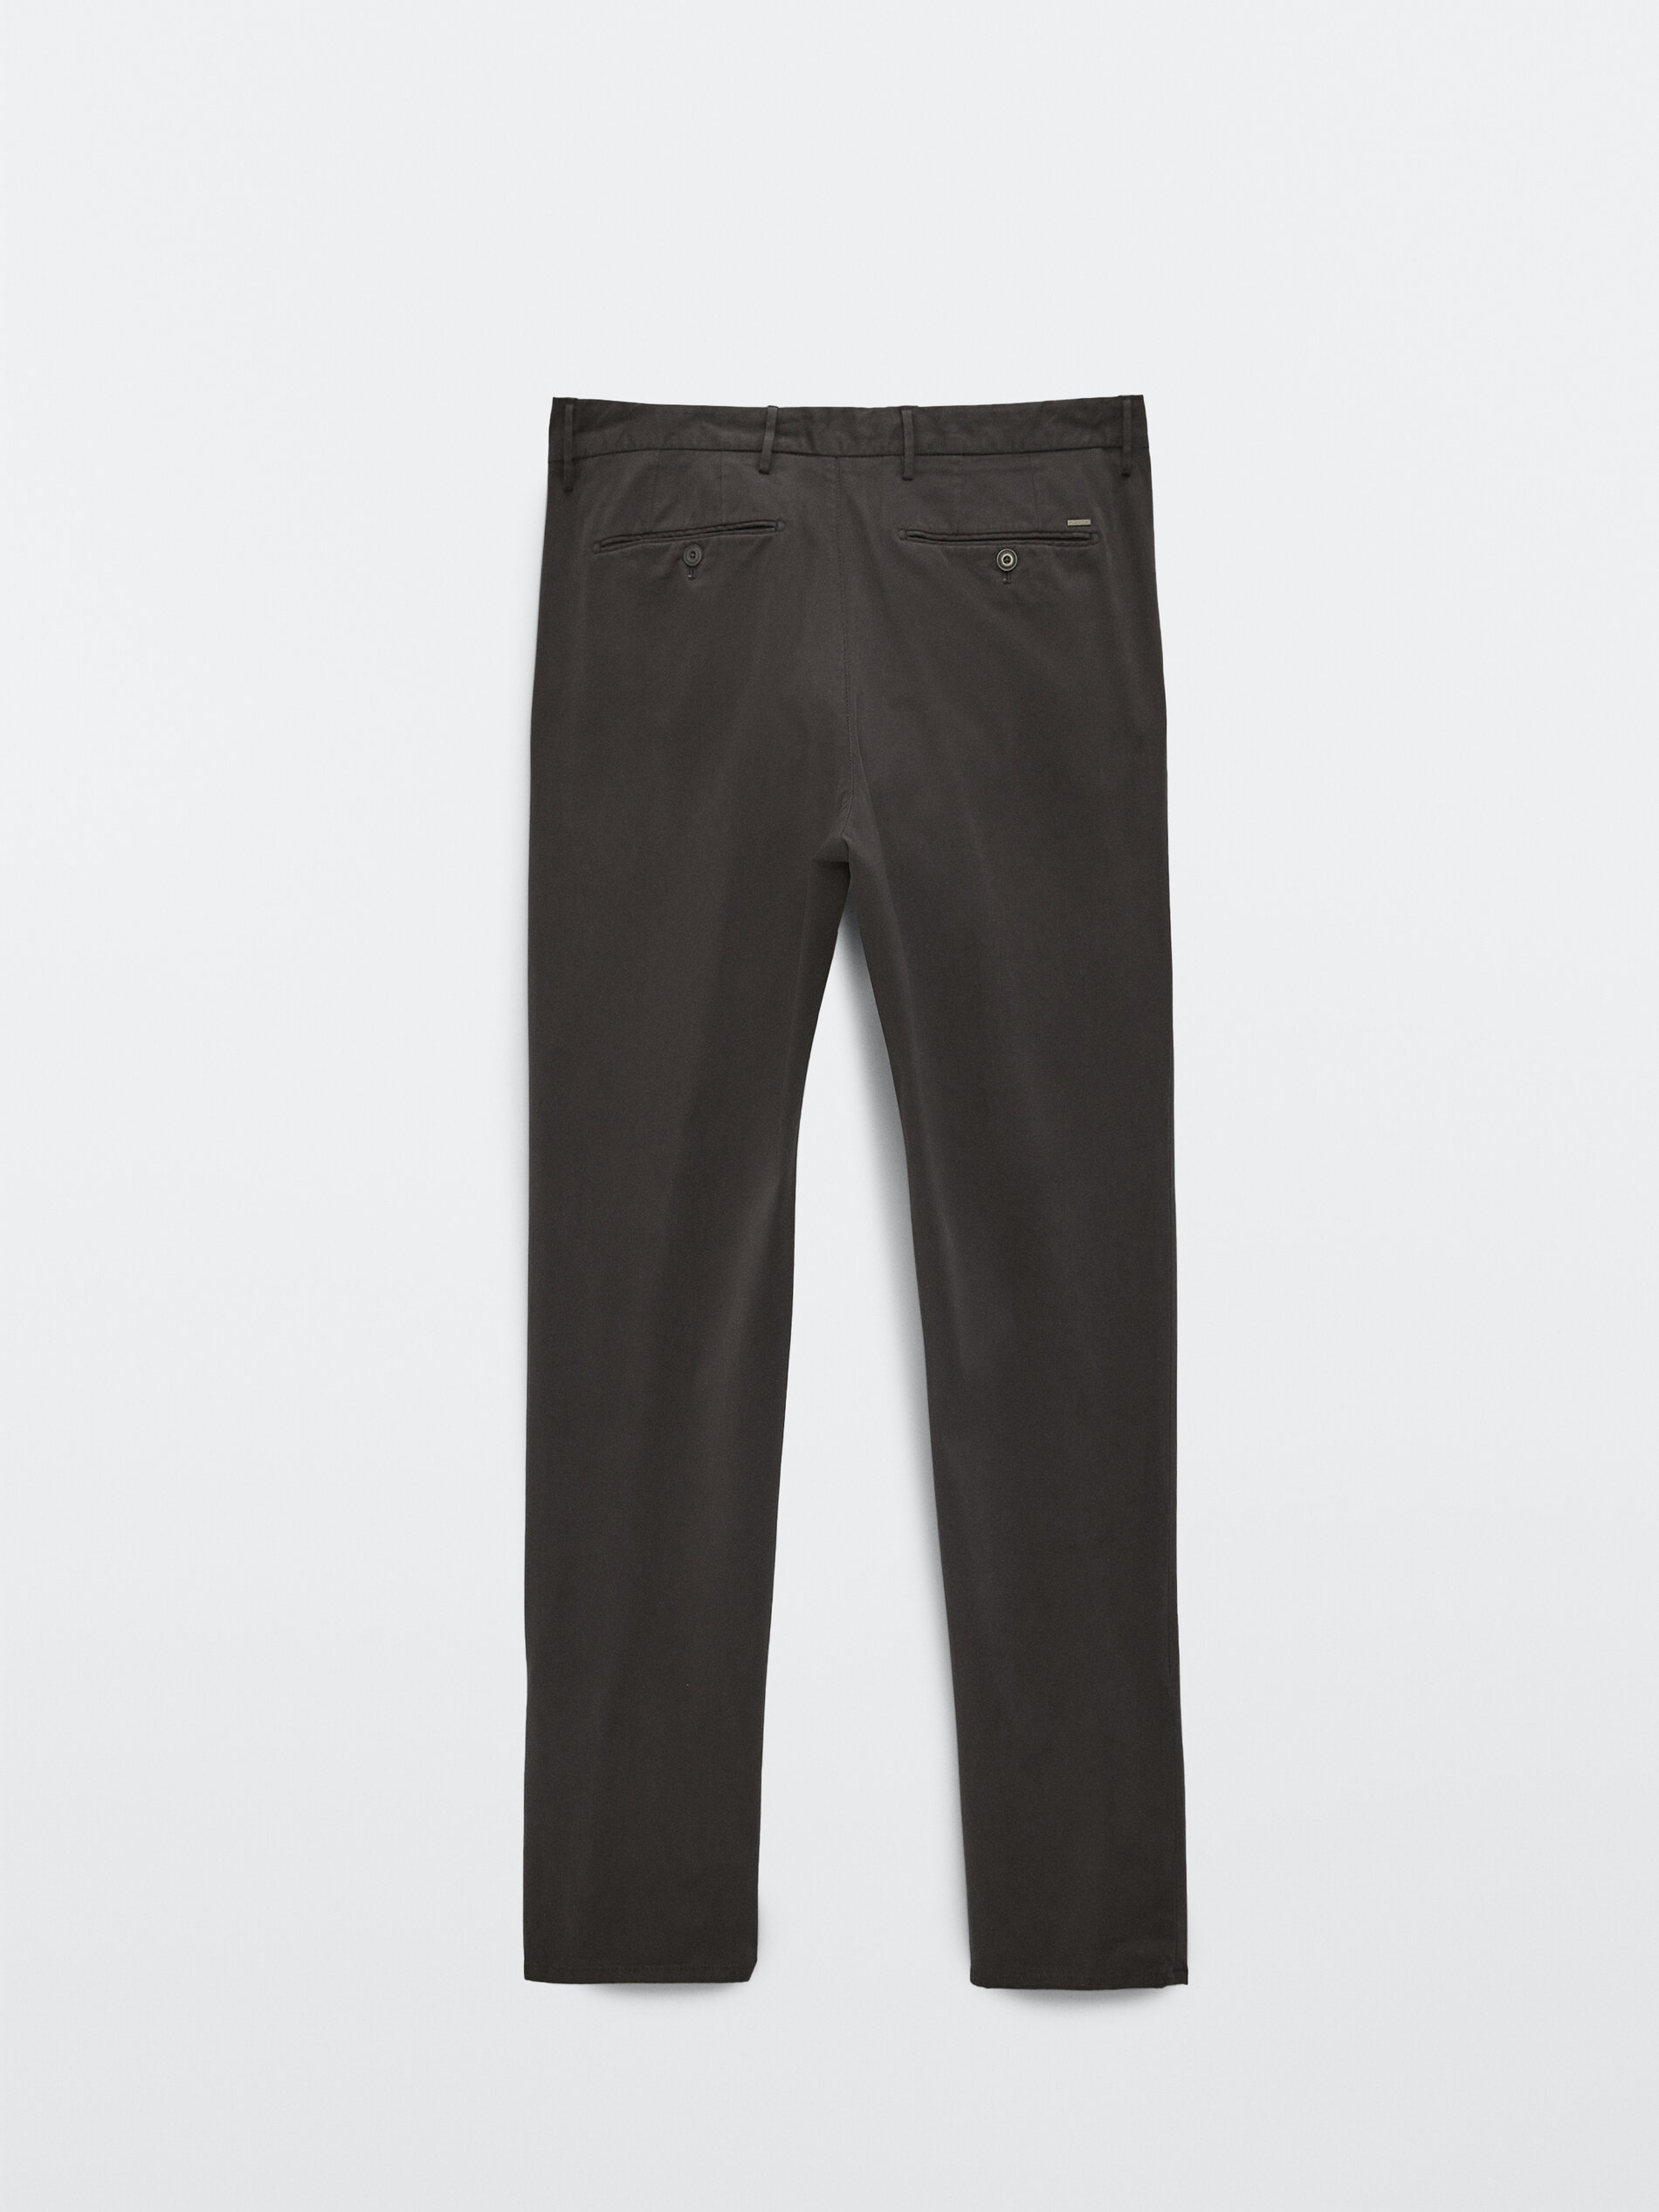 Buy Jet Black Trousers & Pants for Men by NETPLAY Online | Ajio.com